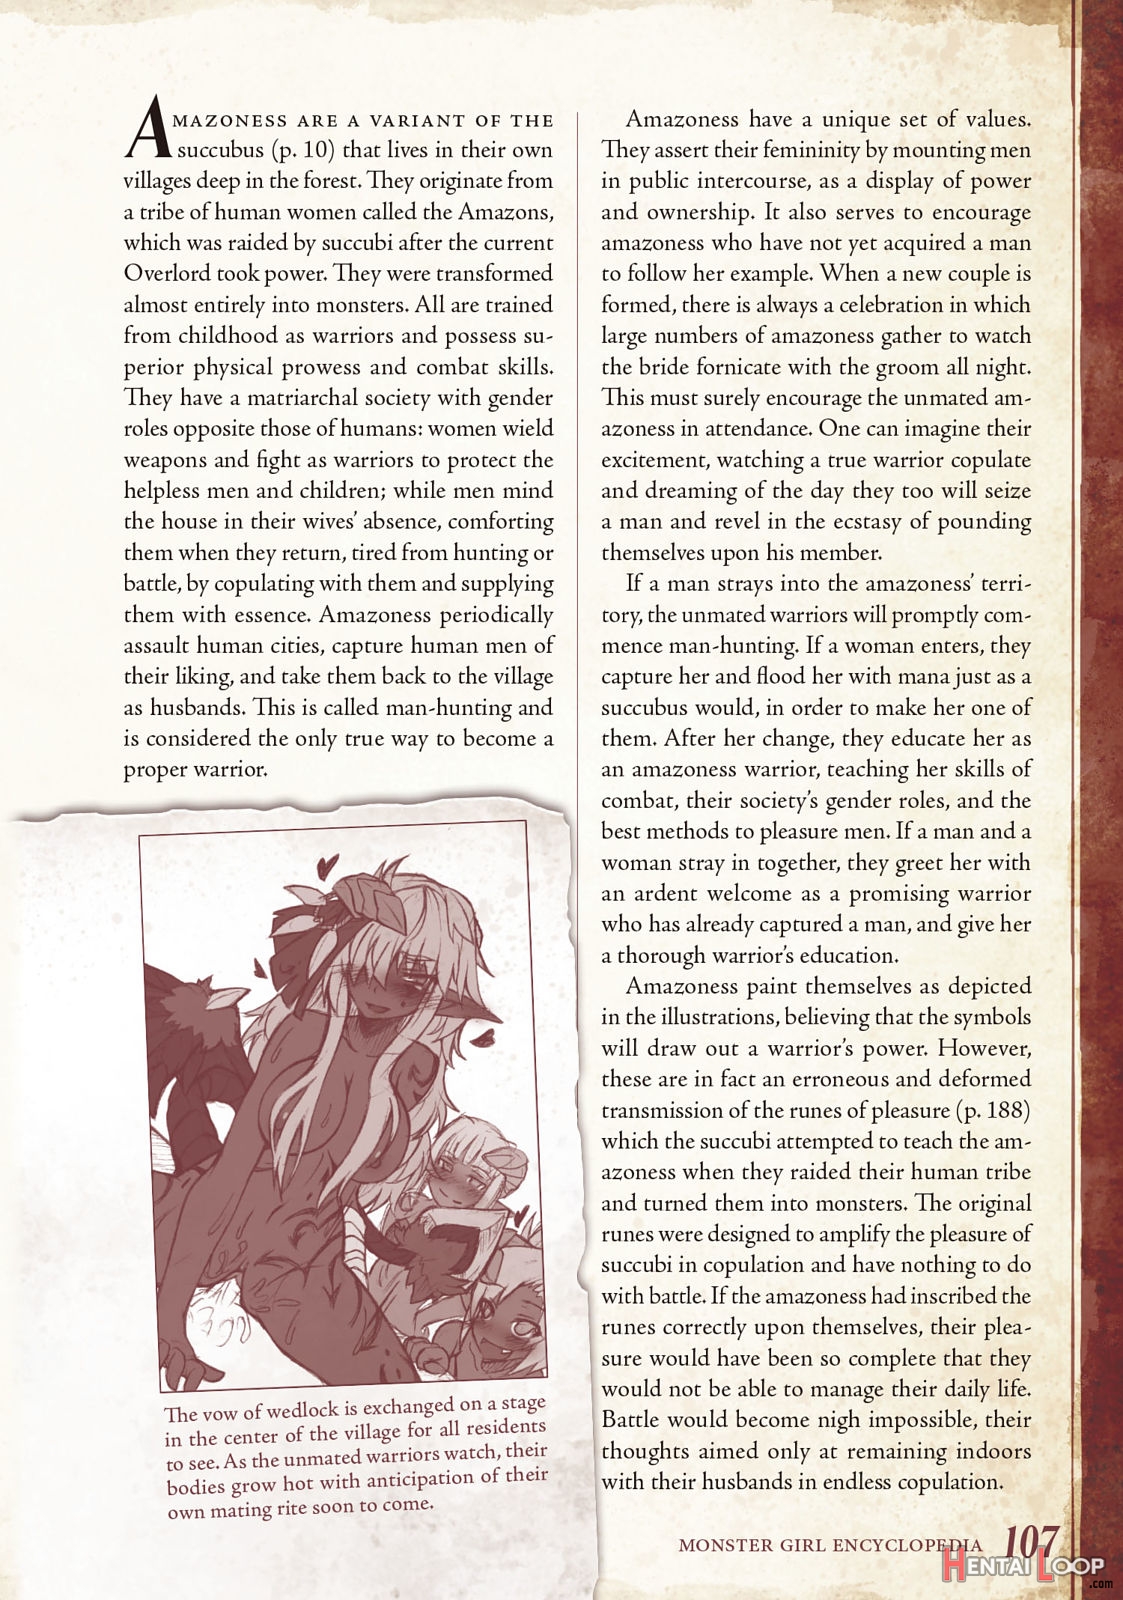 Monster Girl Encyclopedia Vol. 1 page 108